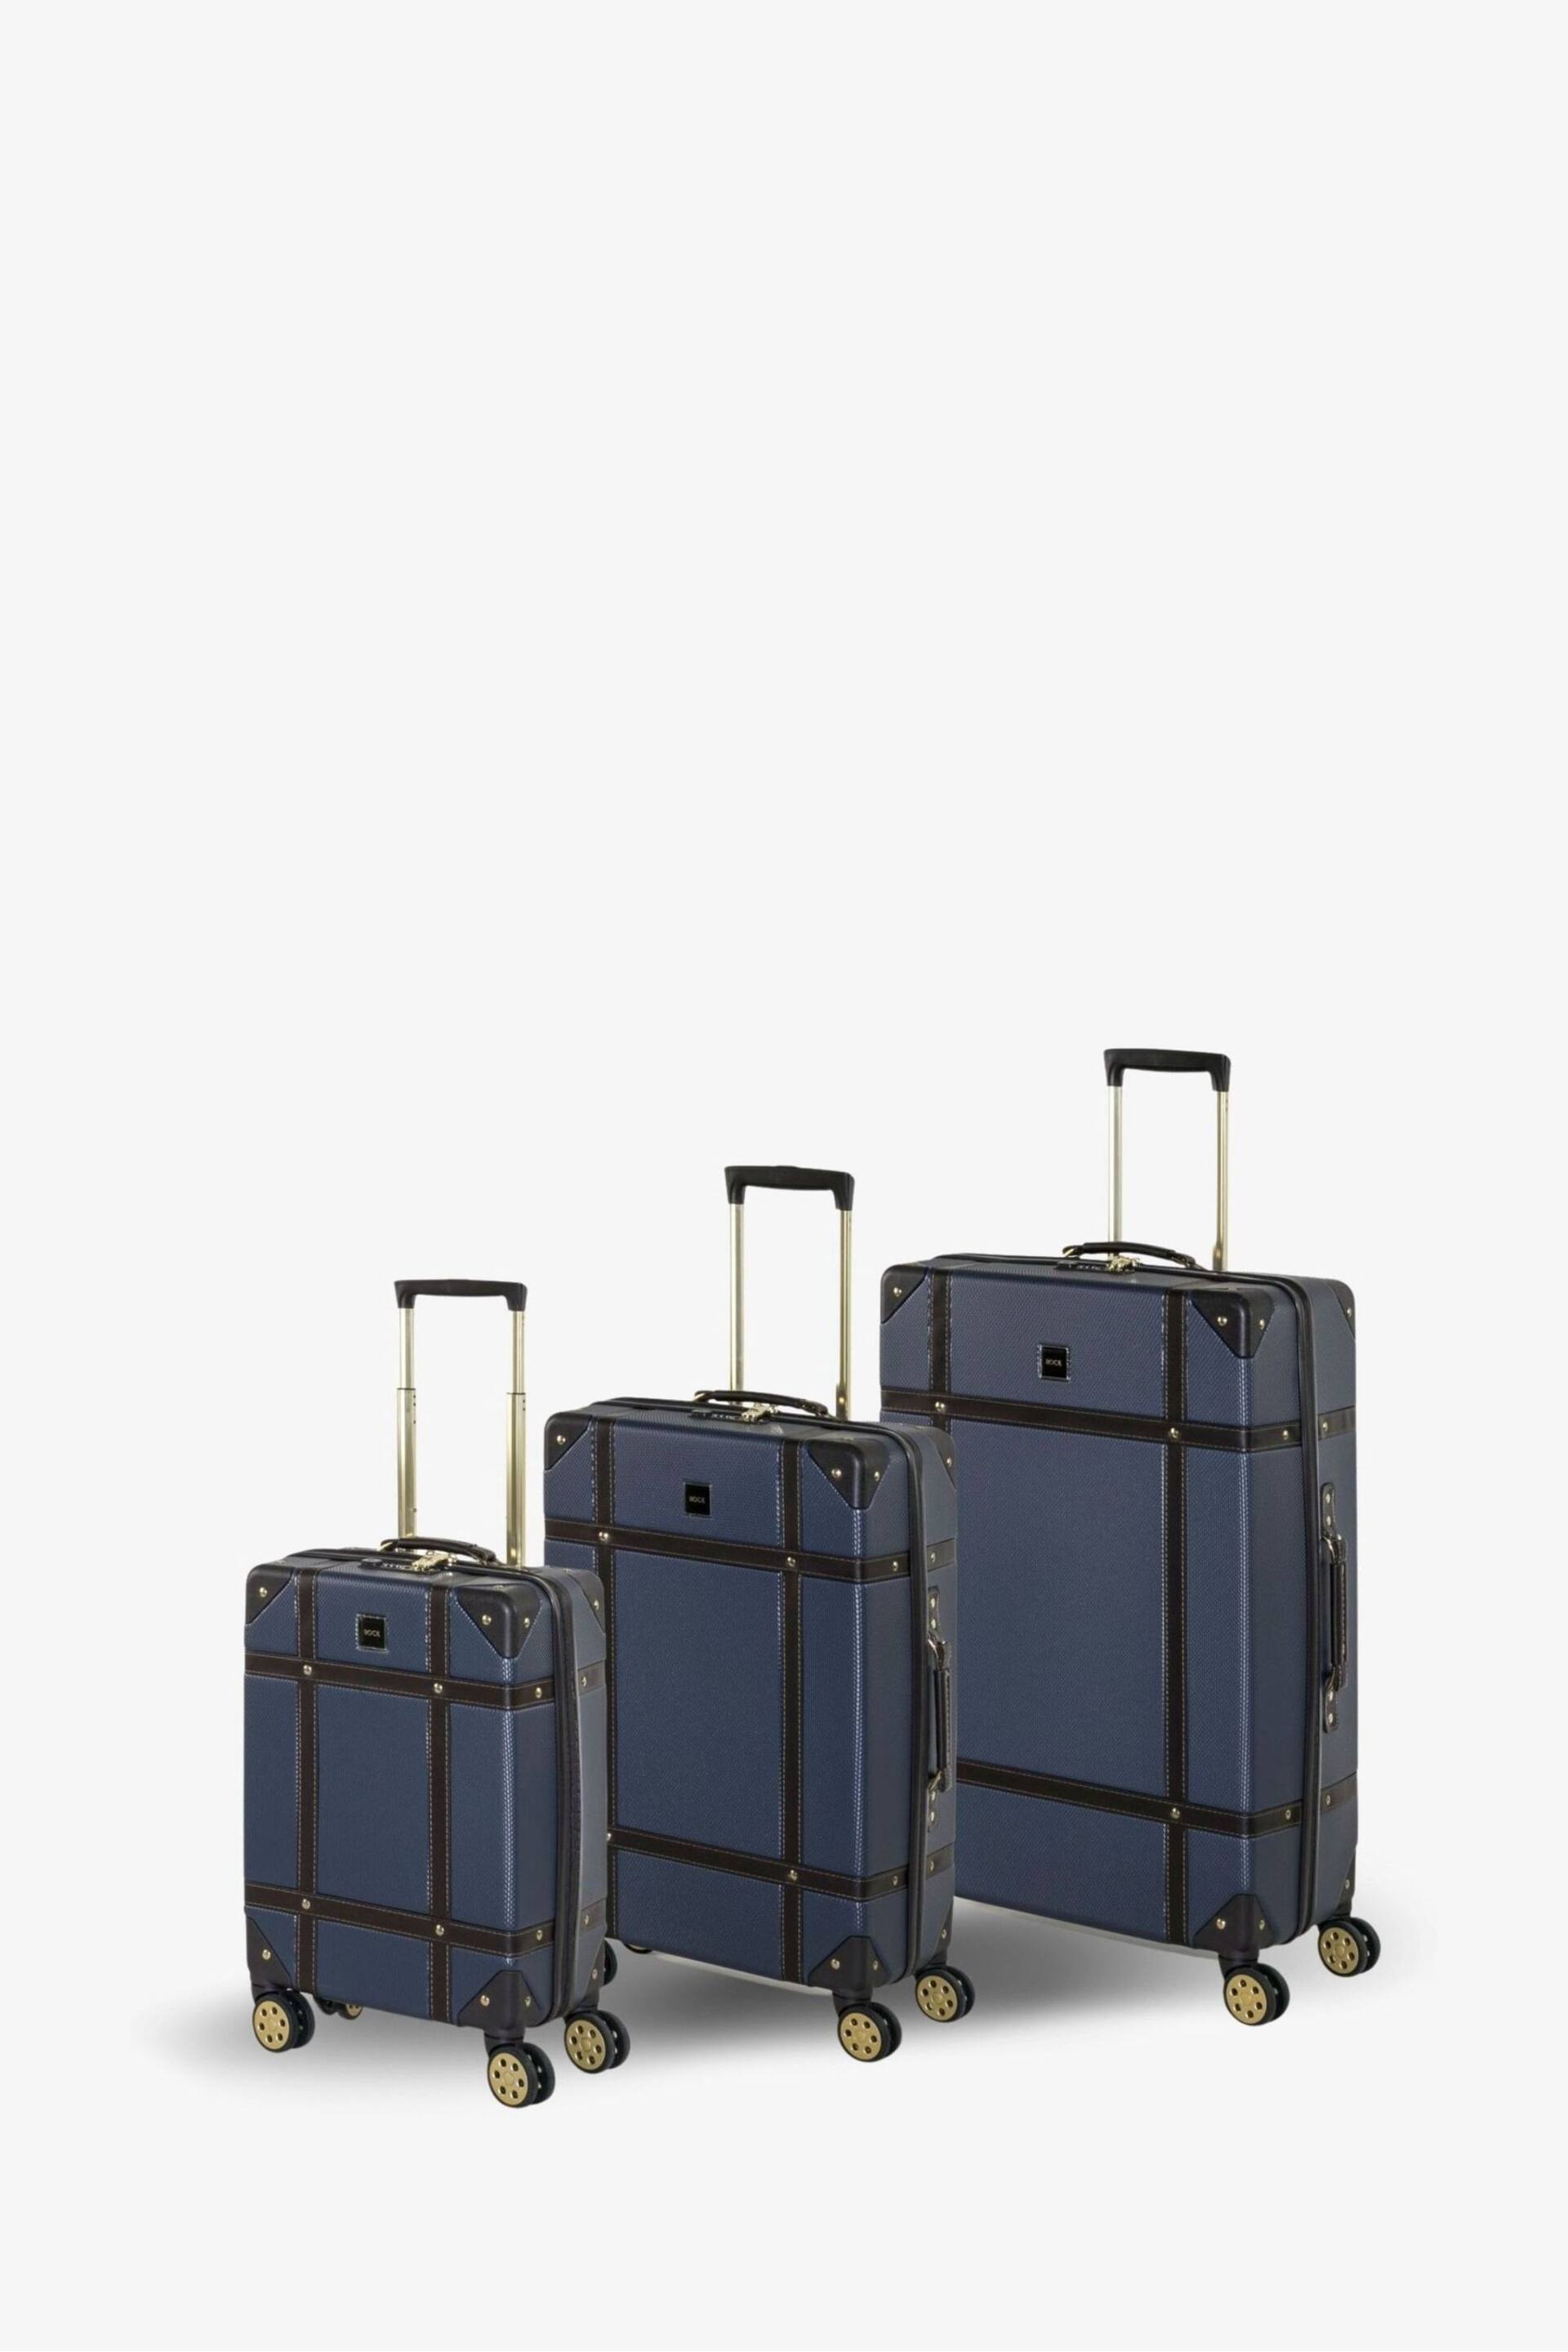 Rock Luggage Vintage Suitcases 3 Pack - Image 1 of 3